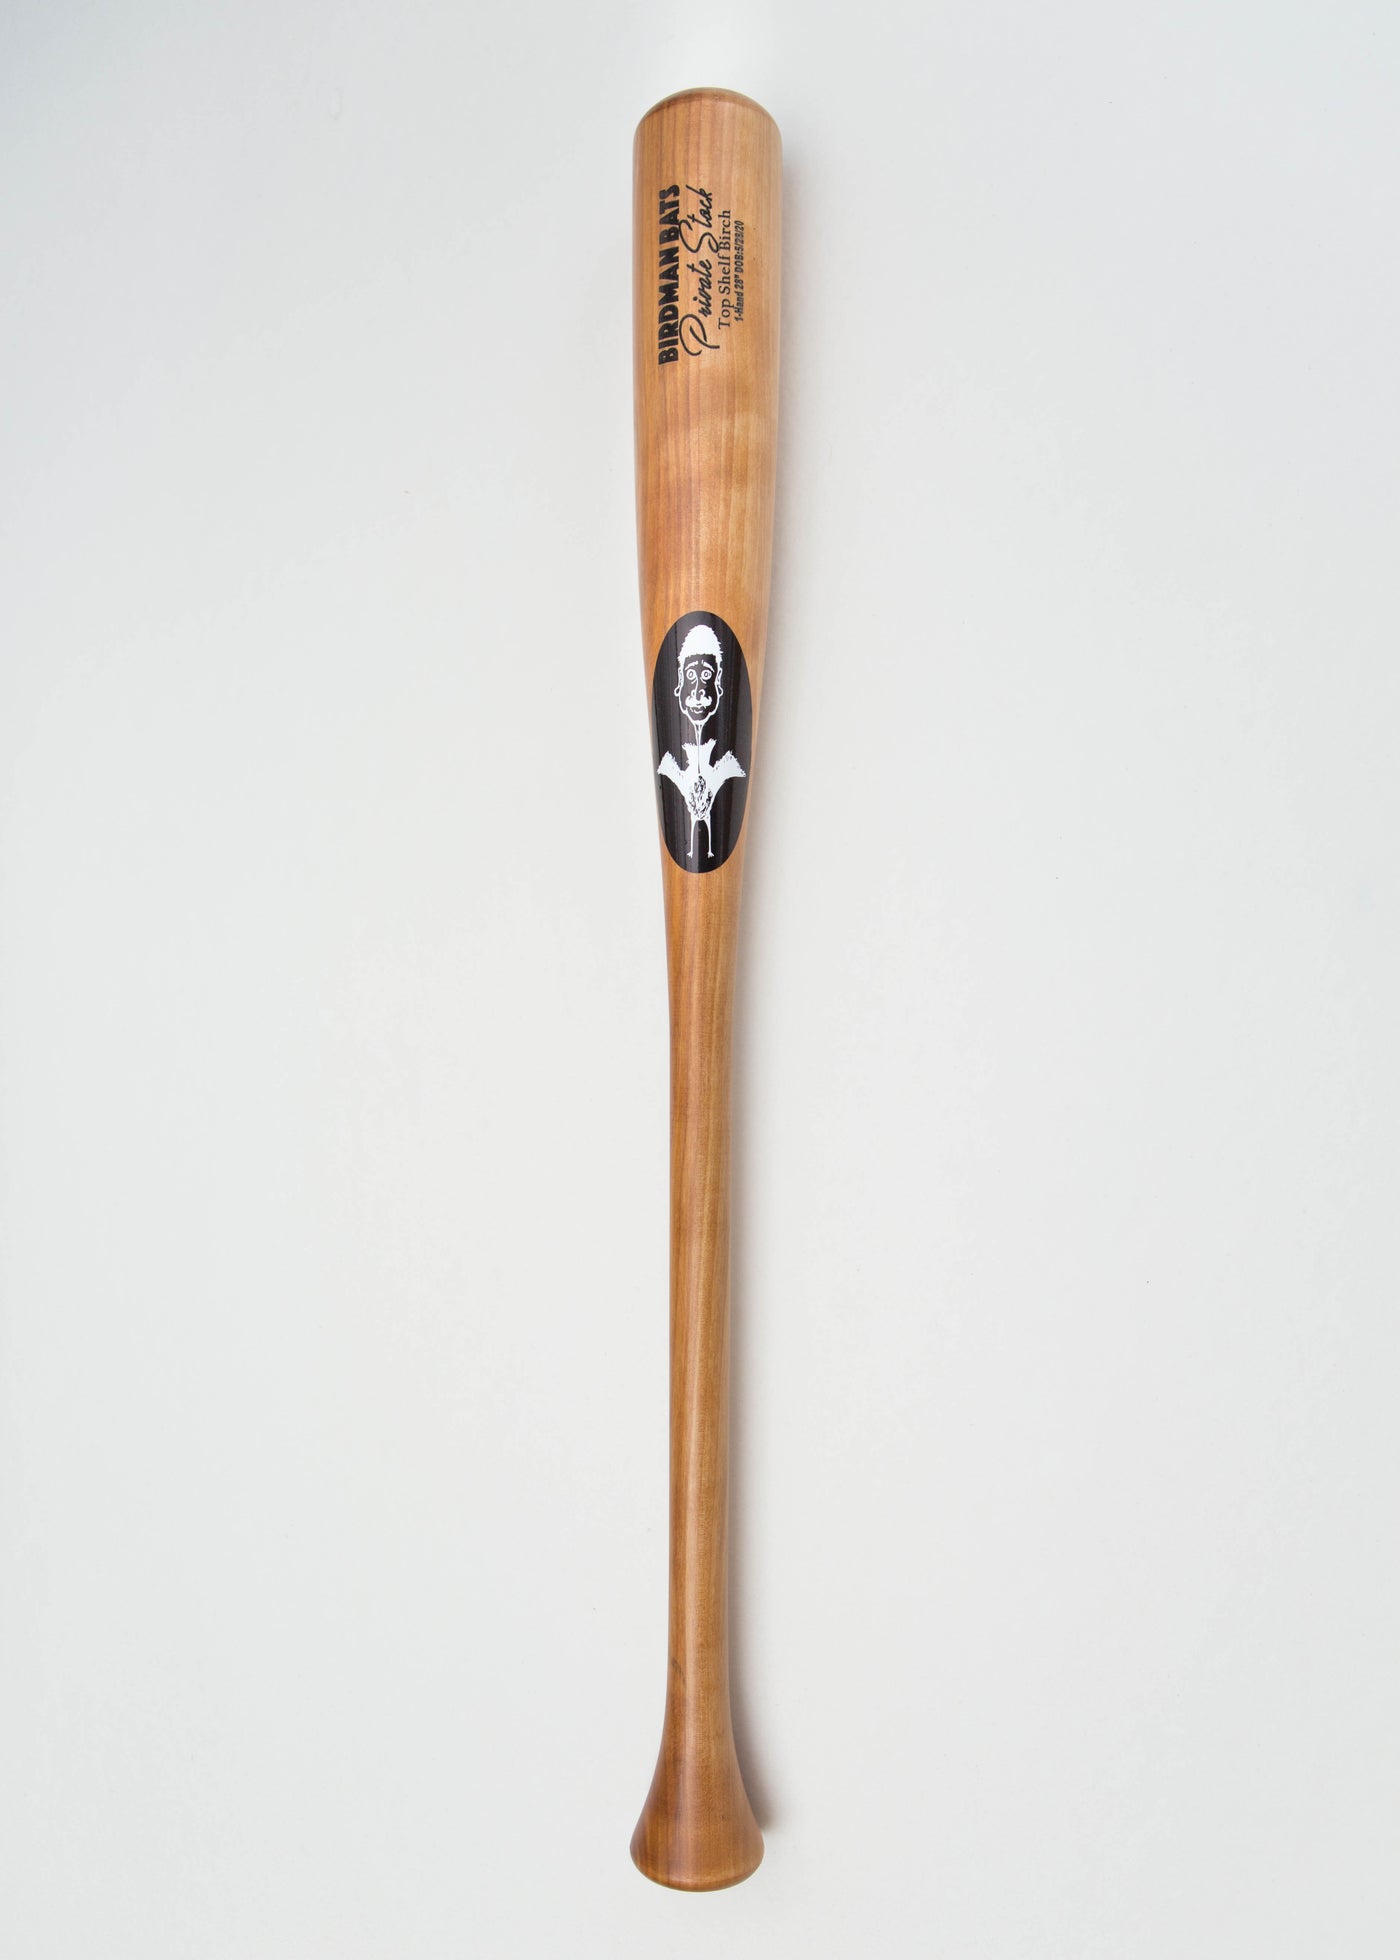 Gripped Wood Baseball Bat Taped Pocket Crosses – The Baseball